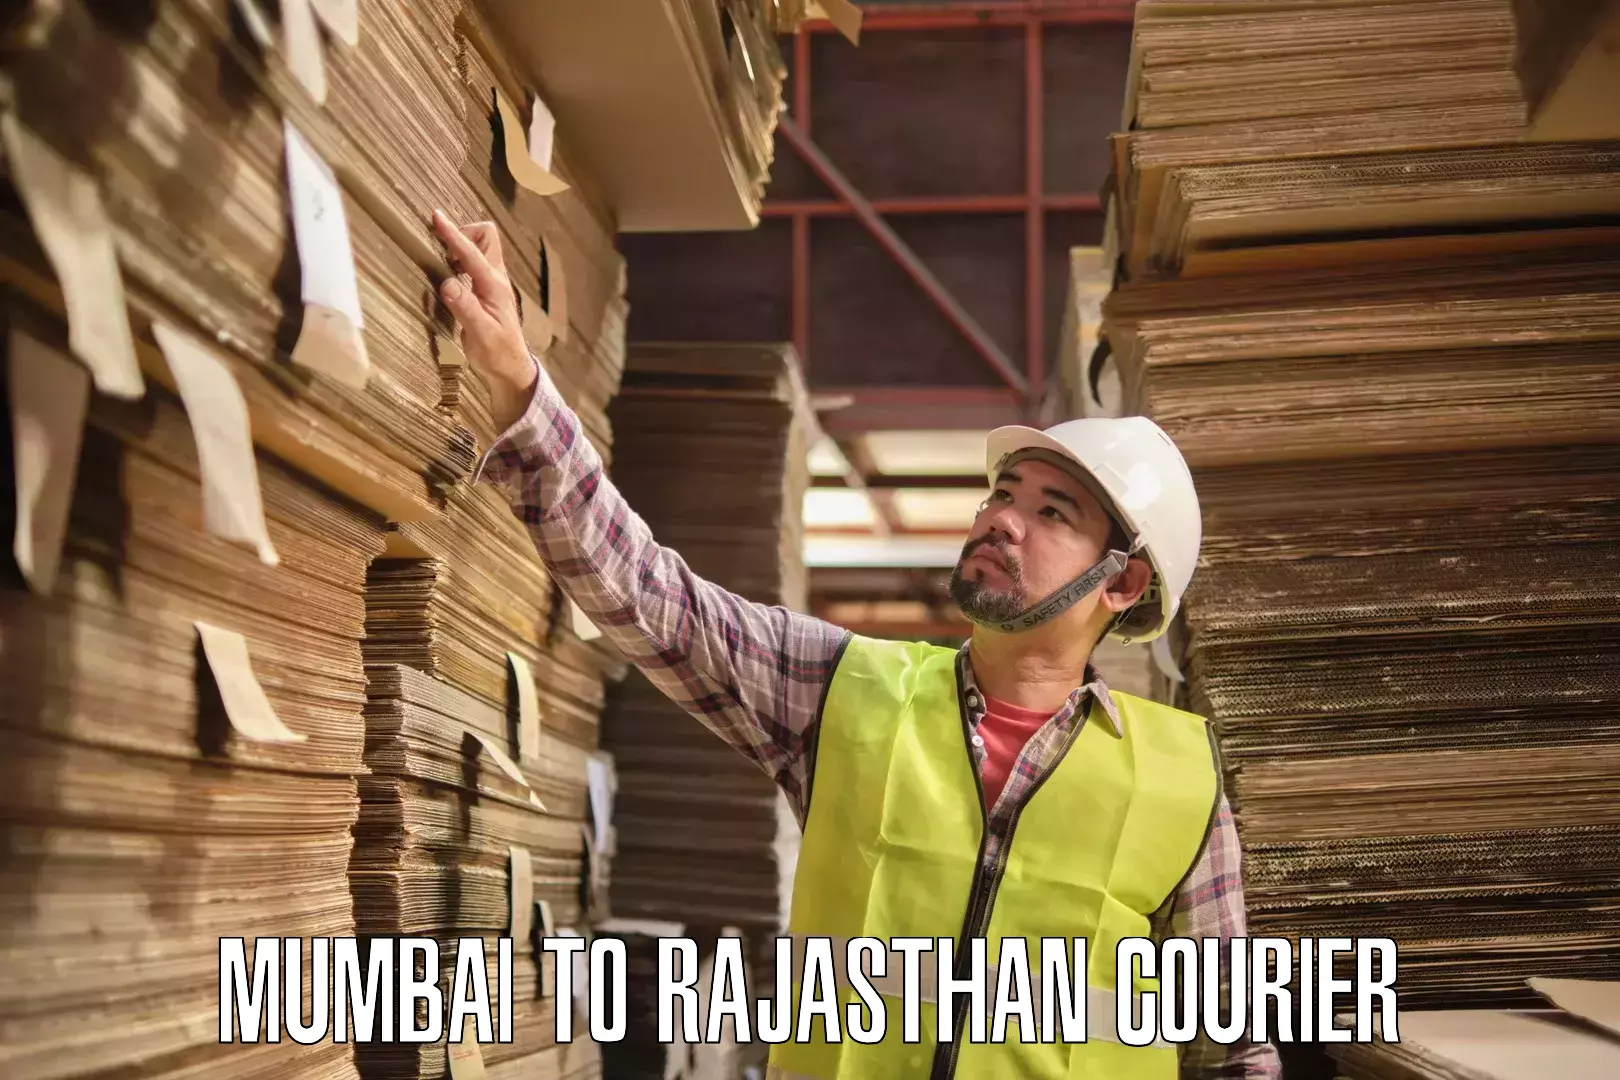 Courier service partnerships in Mumbai to Sambhar